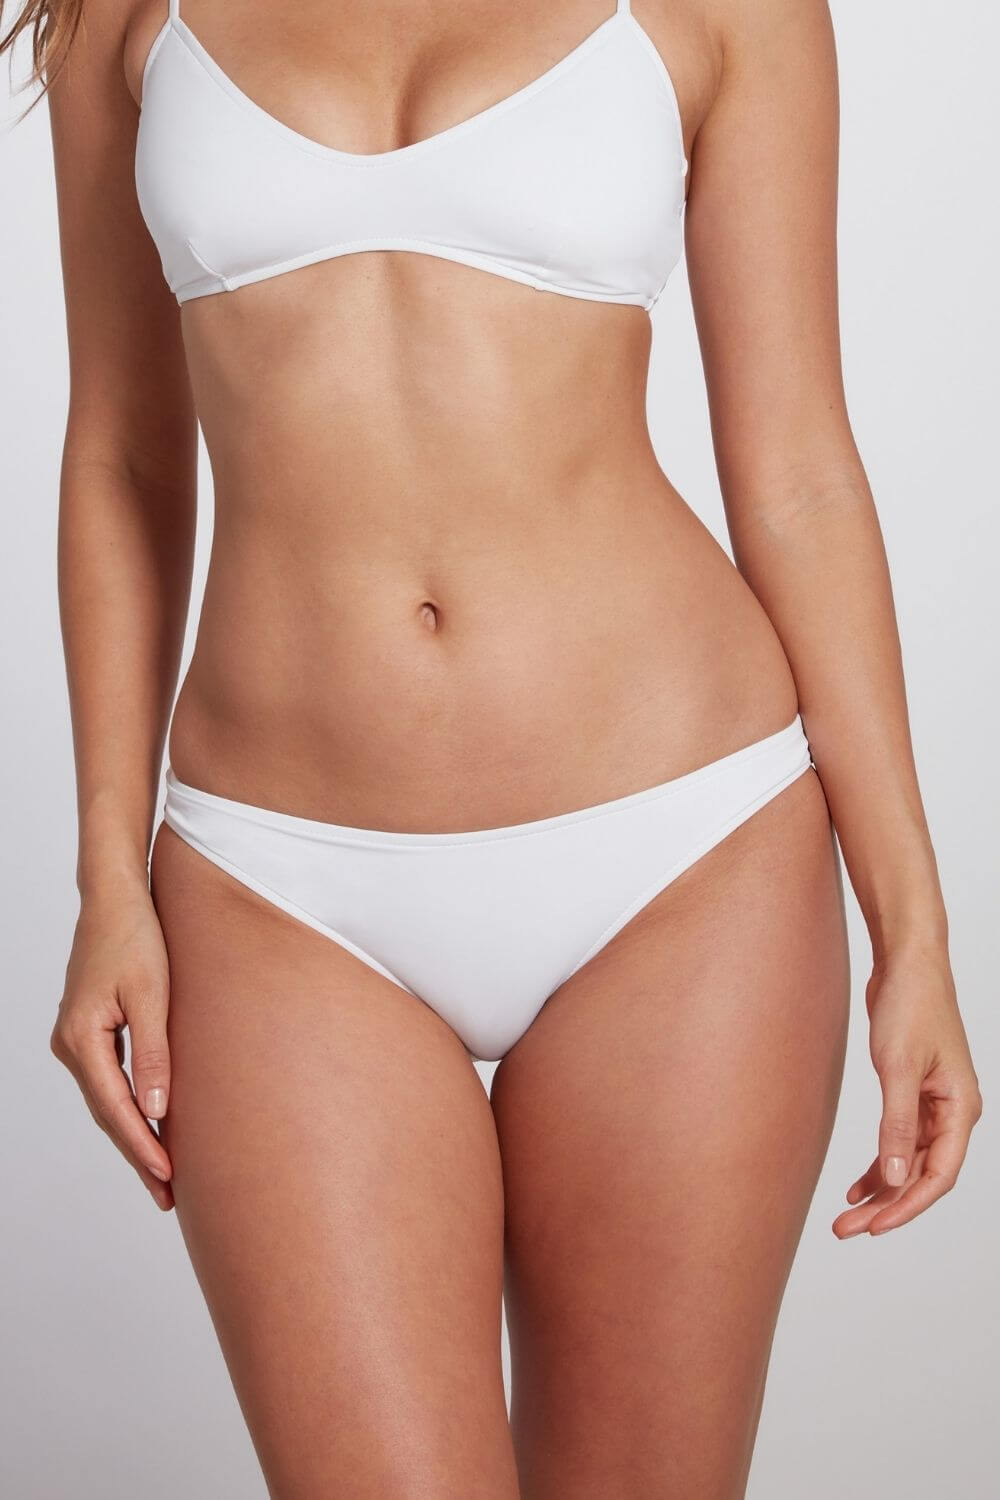 Uitdaging Ideaal deugd Classic Brief White Bikini Bottoms - The Jenna by Sauipe Swim